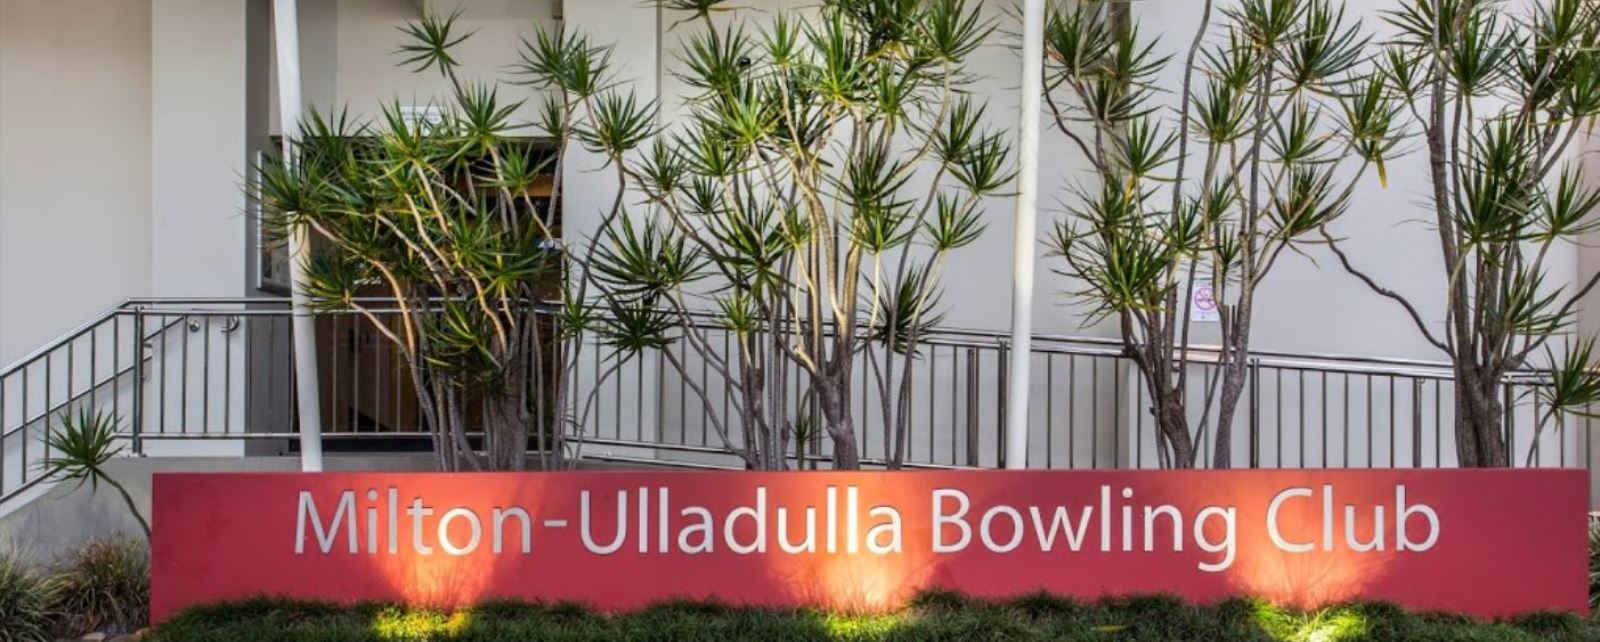 Milton Ulladulla Bowling Club,The Greens Brasserie,casual dining,bistro,restaurant,Ryan Smith,Mollymook Beach Waterfront